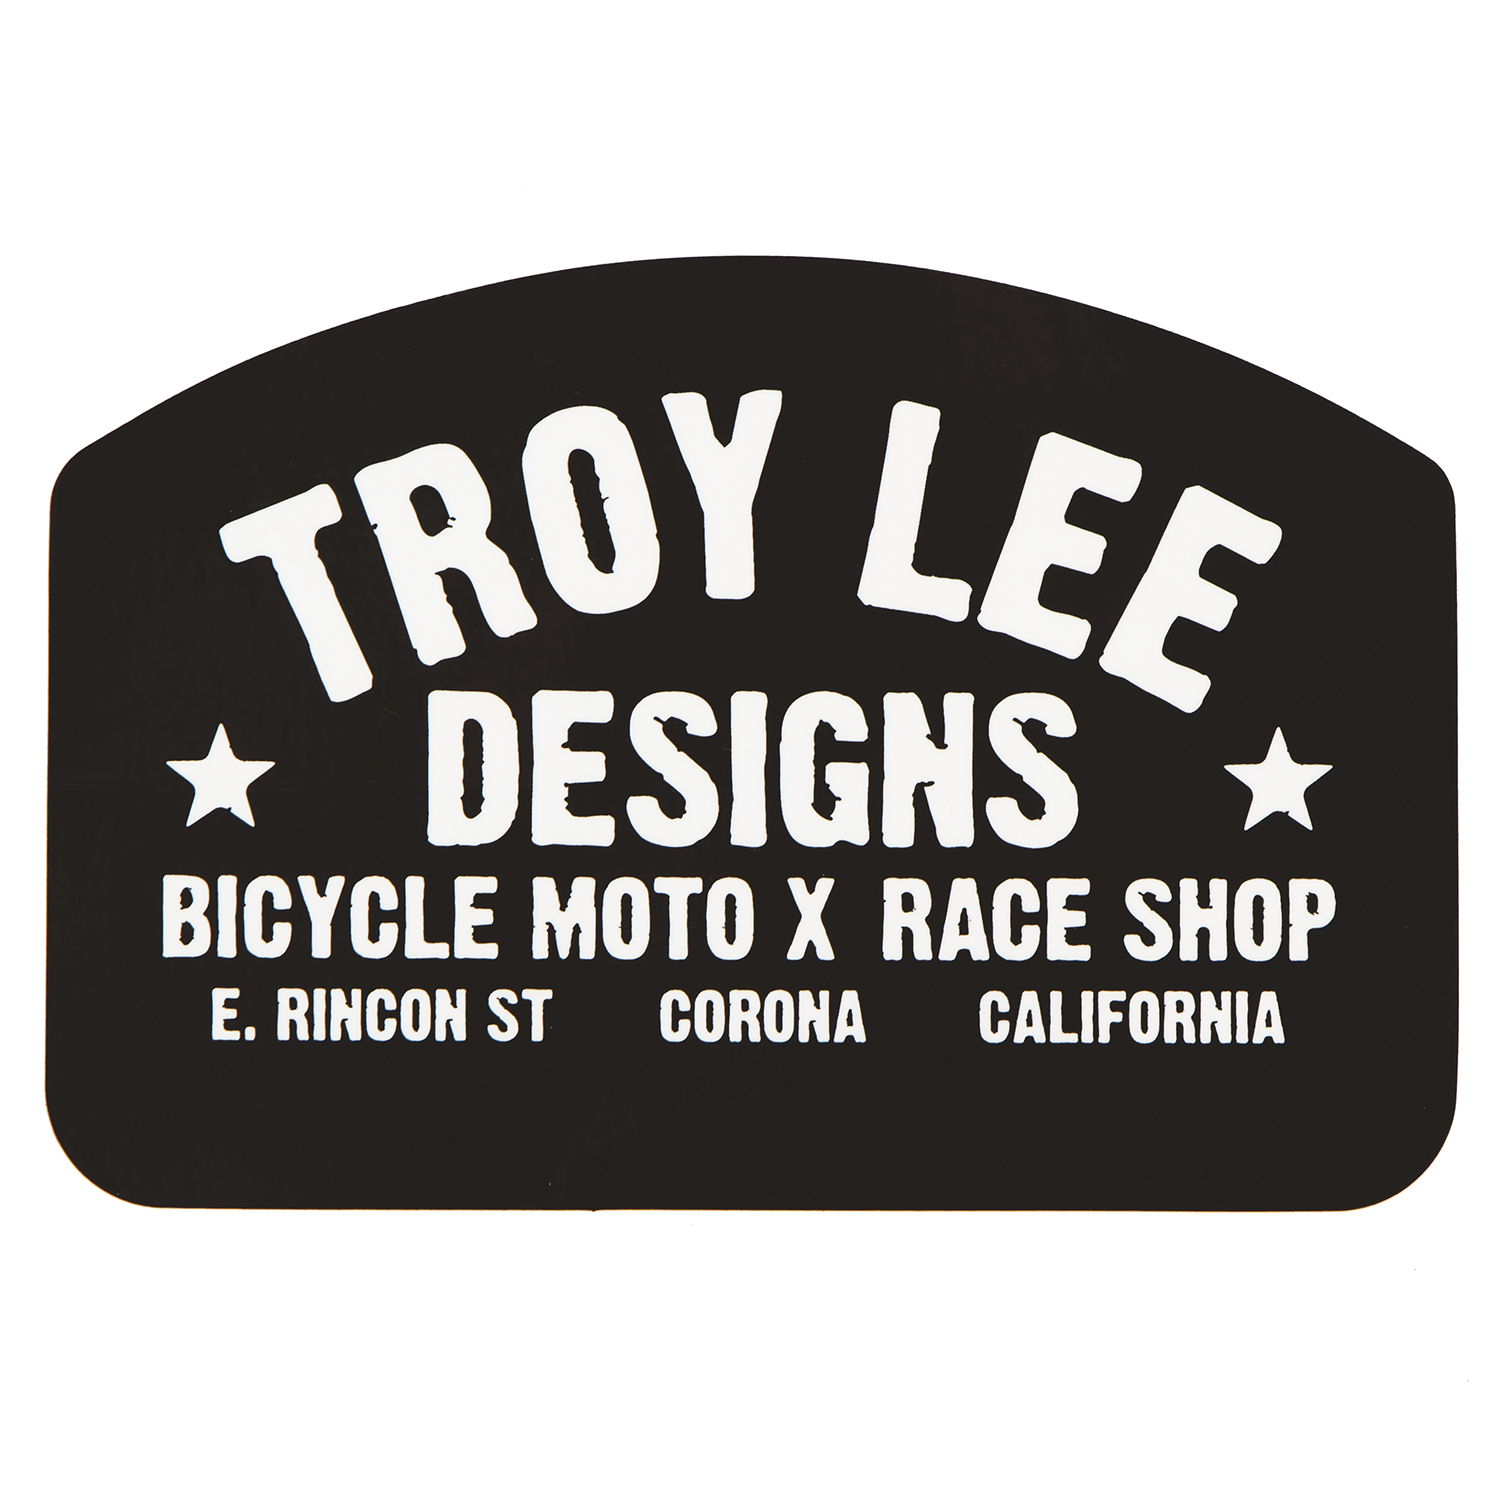 Troy Lee Designs Adesivi Race Shop Black/White - 3.5 inches